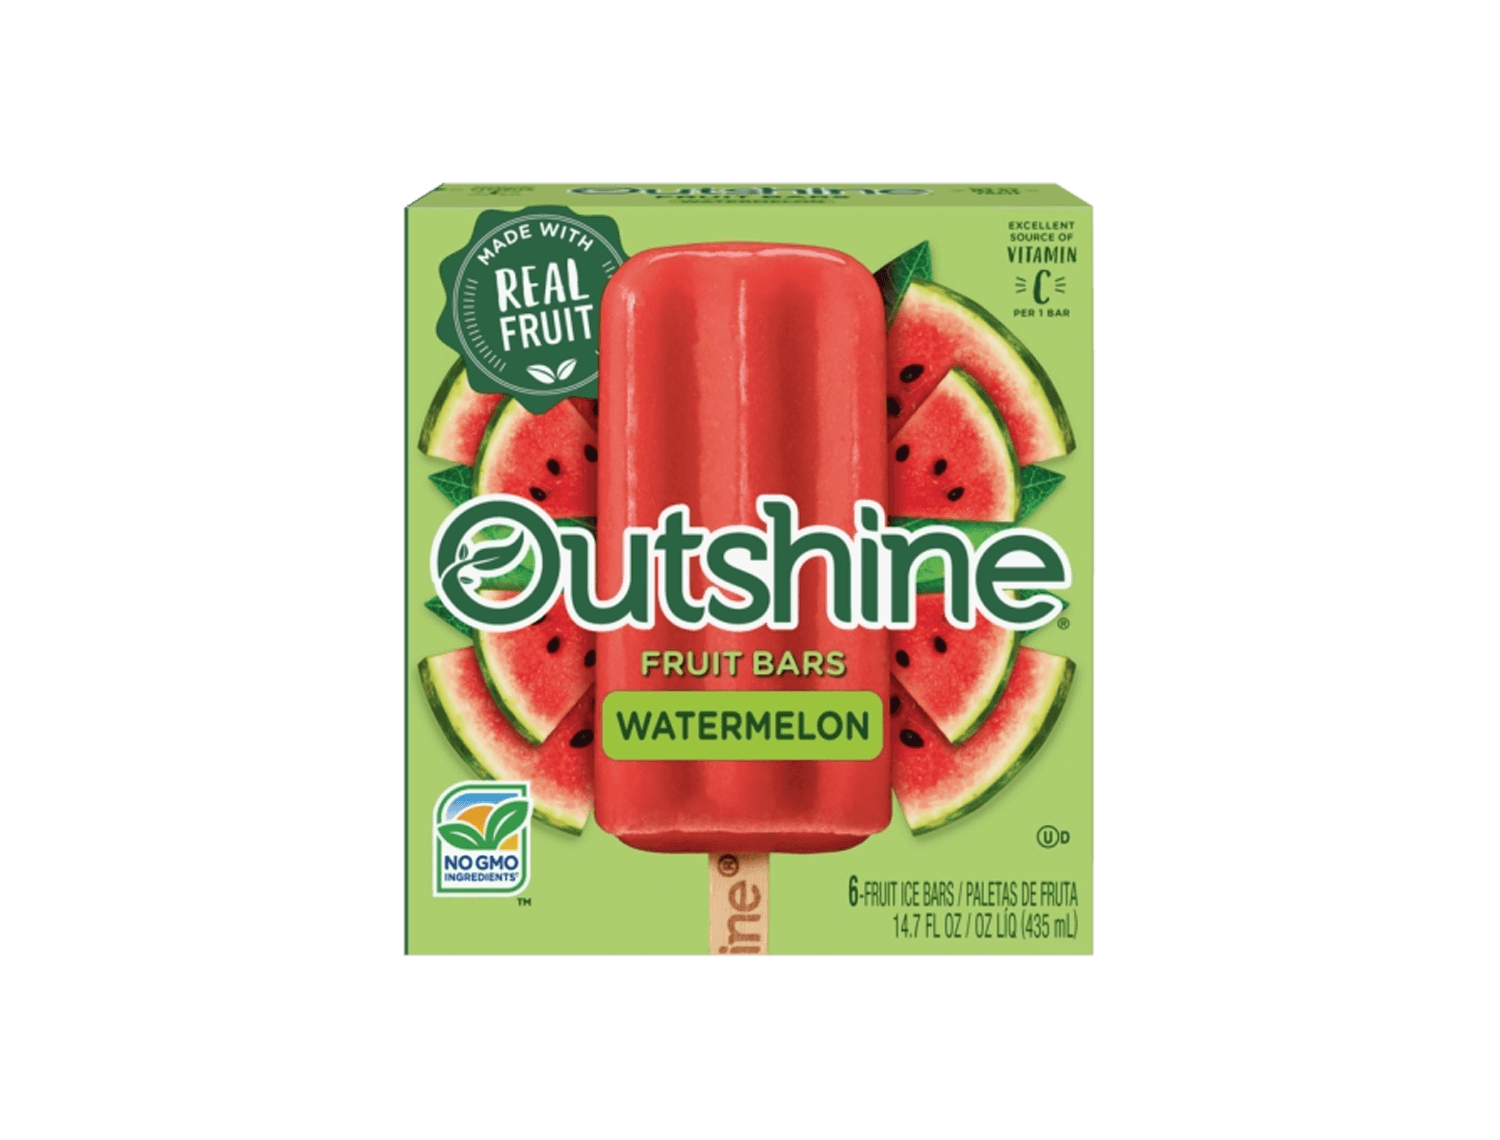 box of Outshine watermelon fruit bars